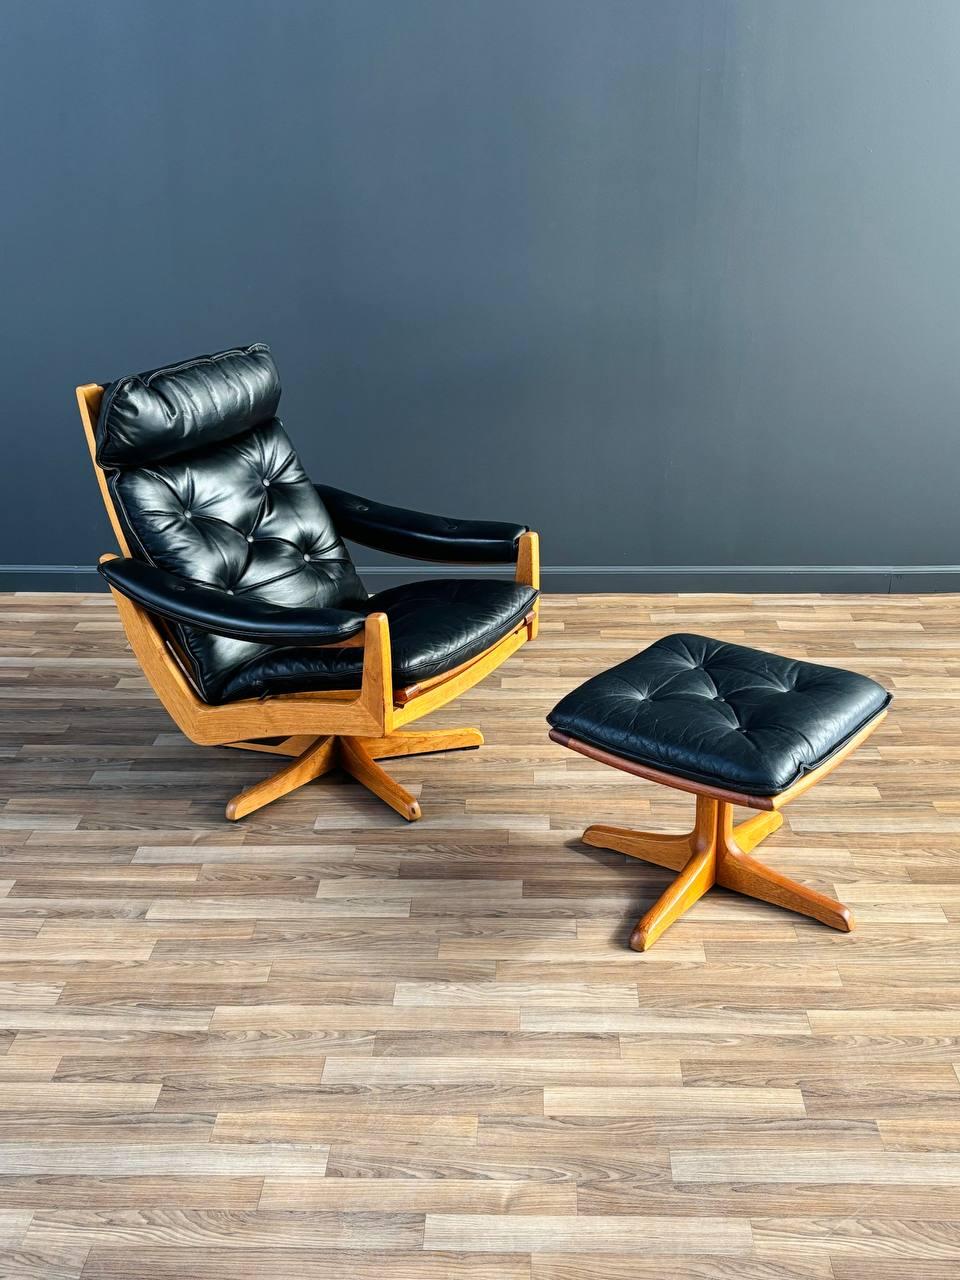 Materials: Teak, Black Leather

Dimensions: 
Chair:
35”H x 32”W x 32”D
Seat Height 17”
Ottoman:
16”H x 19”W x 19”D